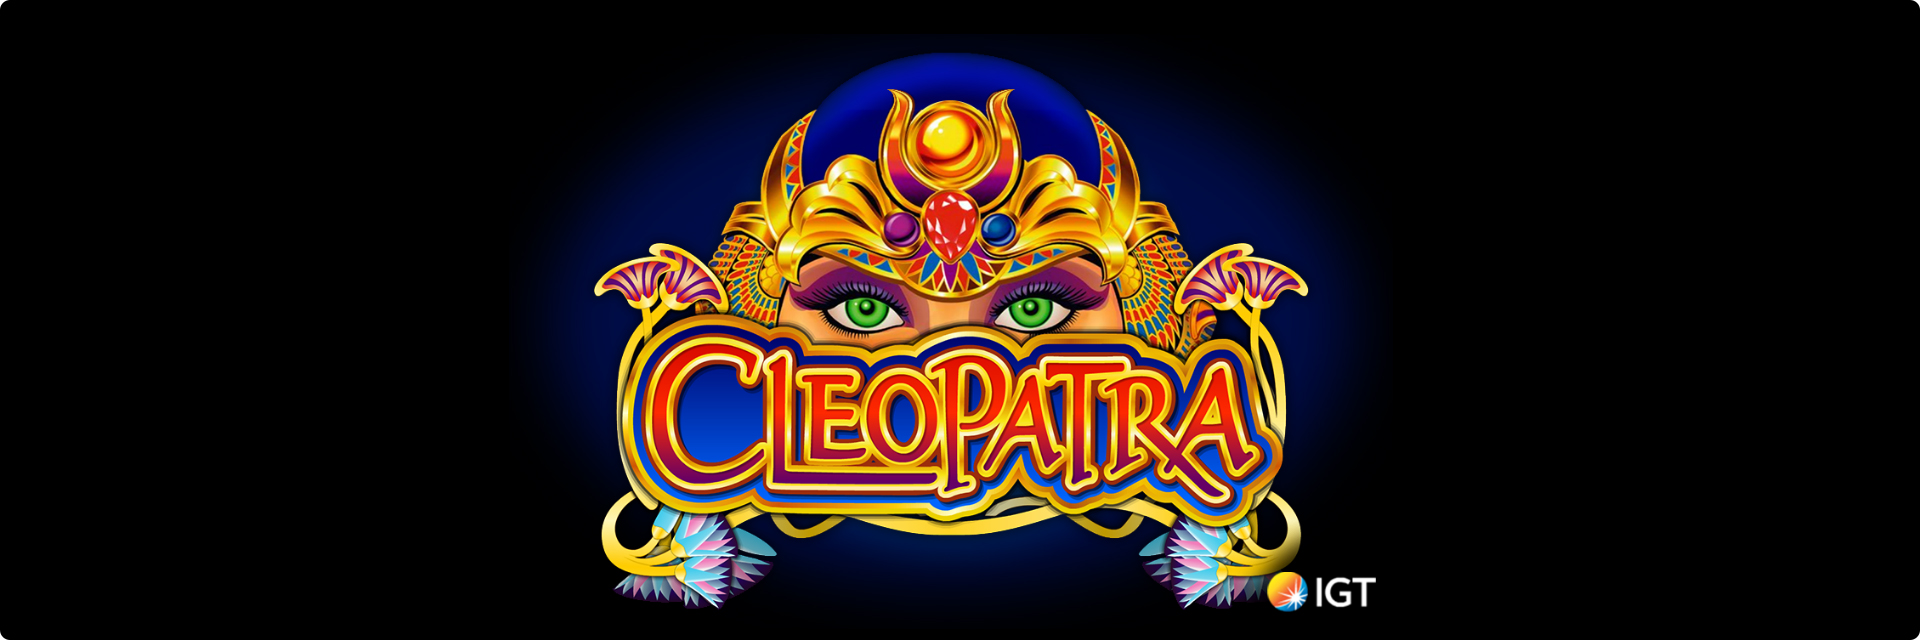 Cleopatra online slot logo. 